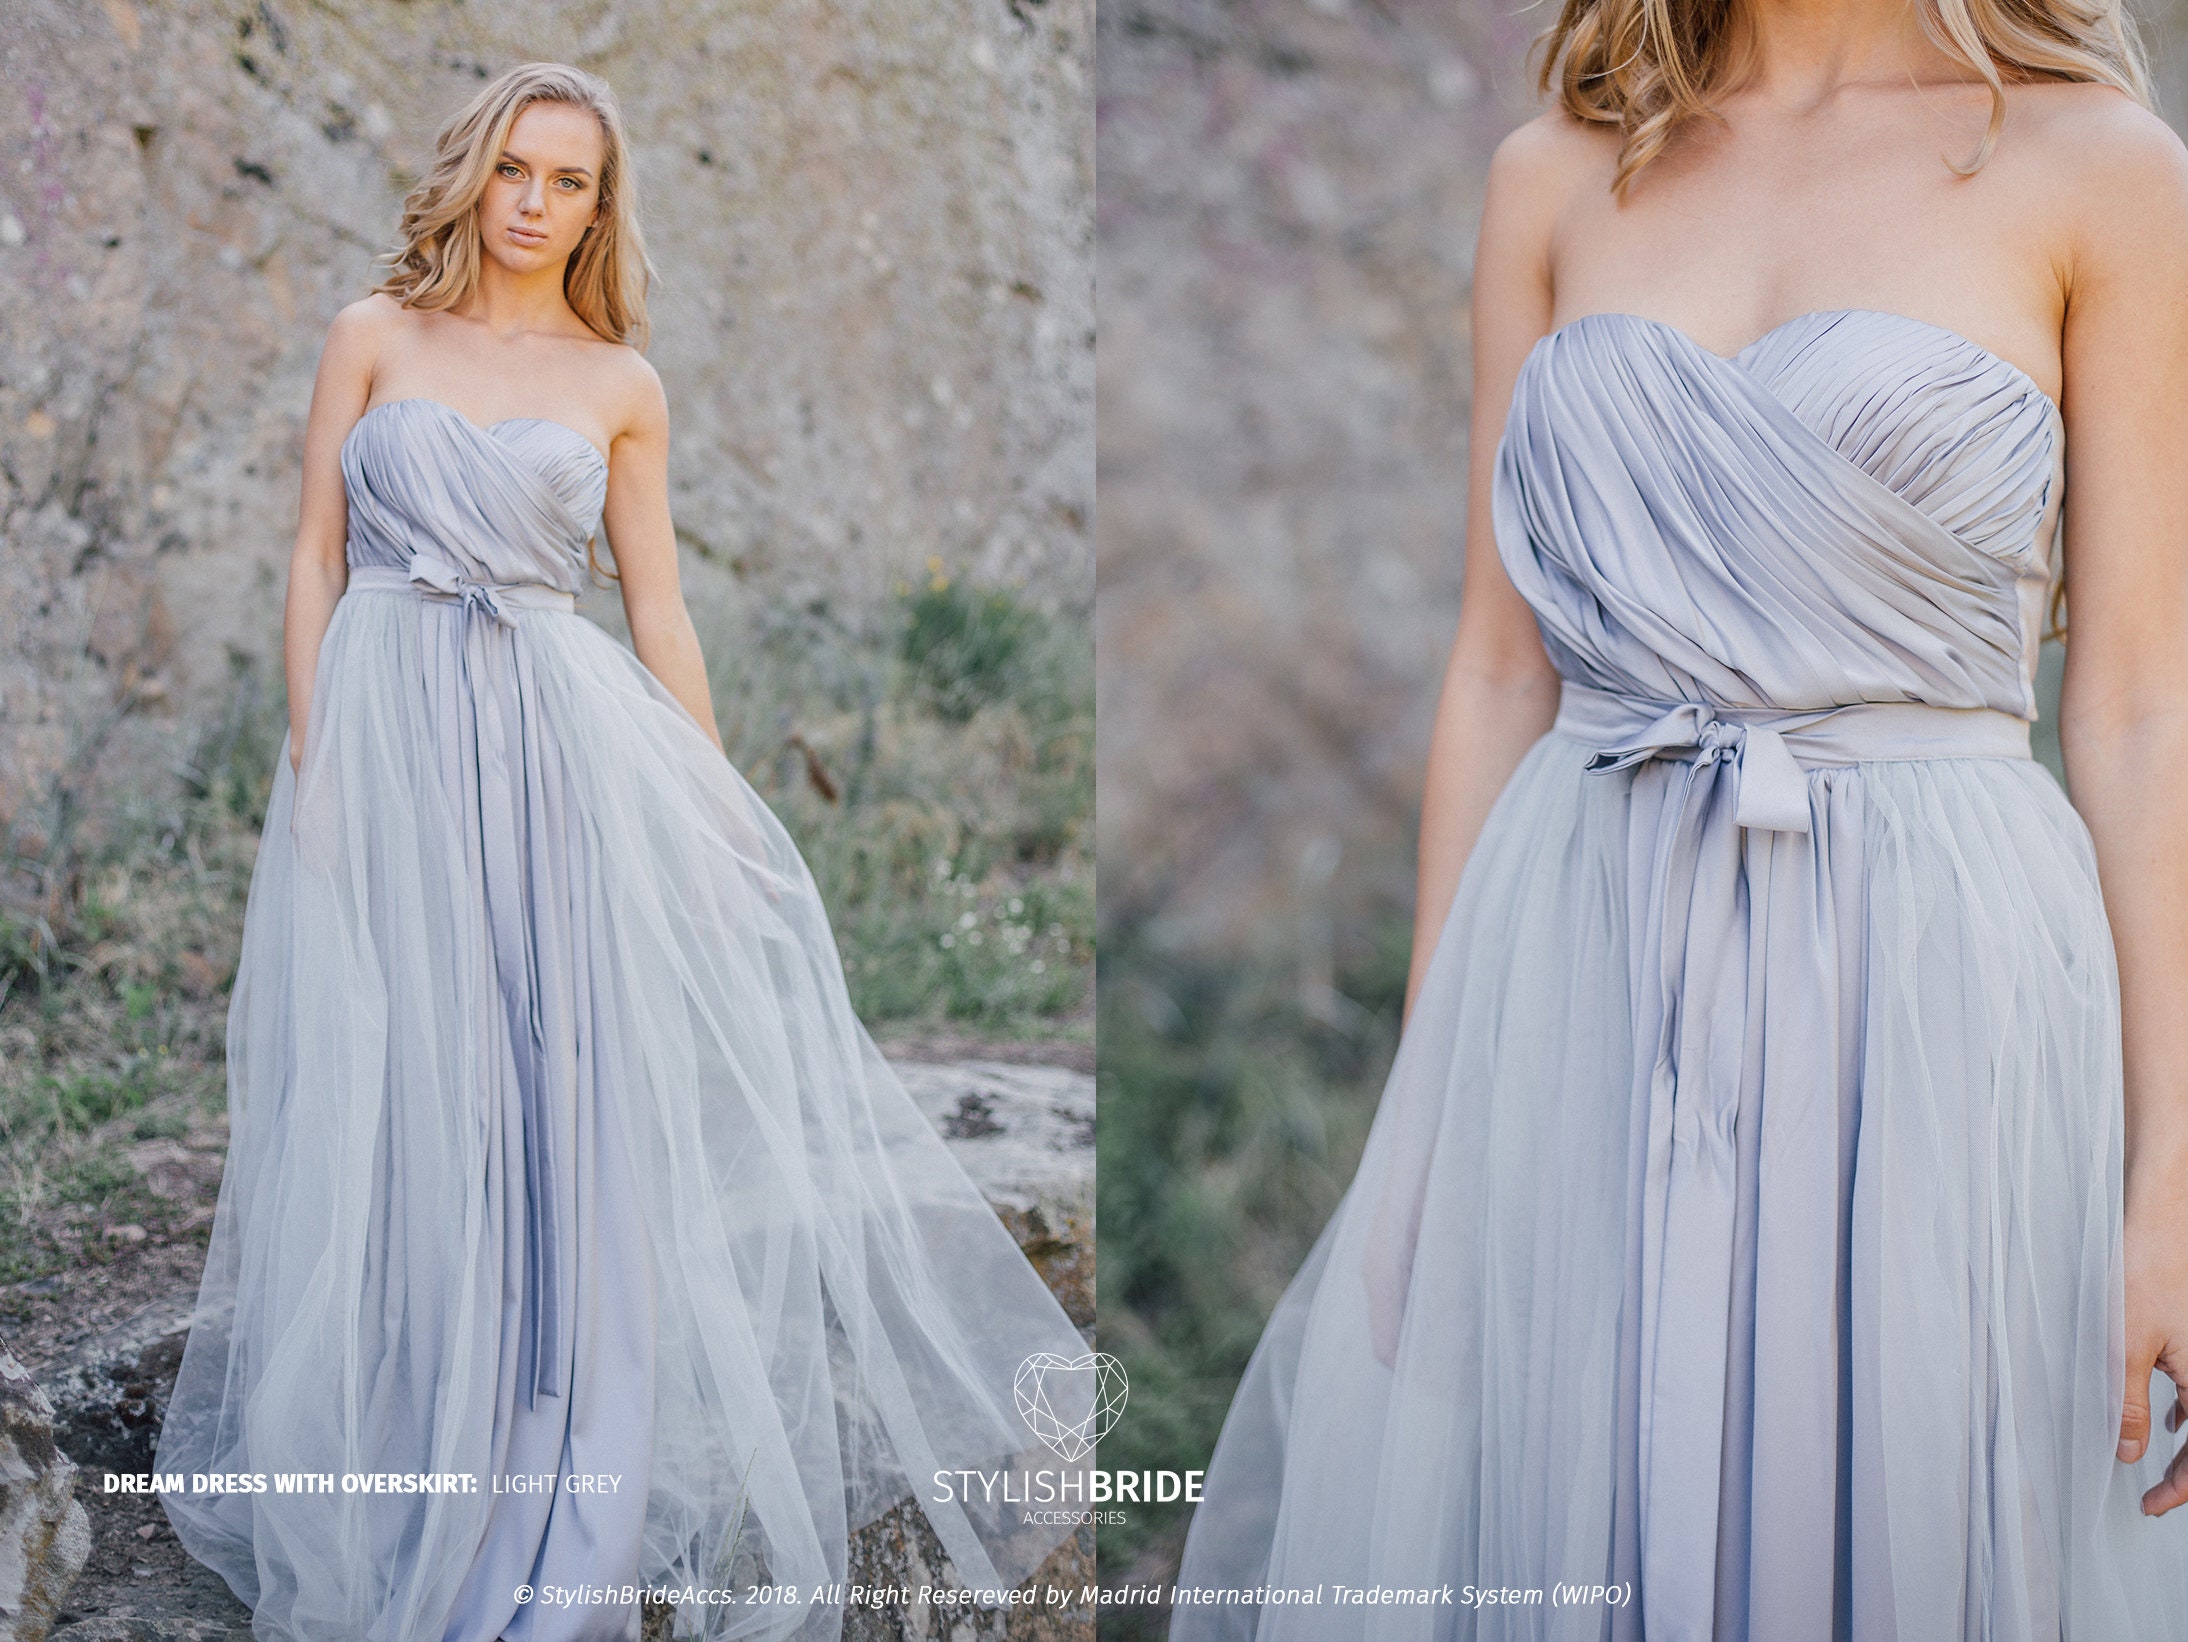 Wedding Outfit Idea Featuring a Gray Maxi Dress - Gray Maxi Dress